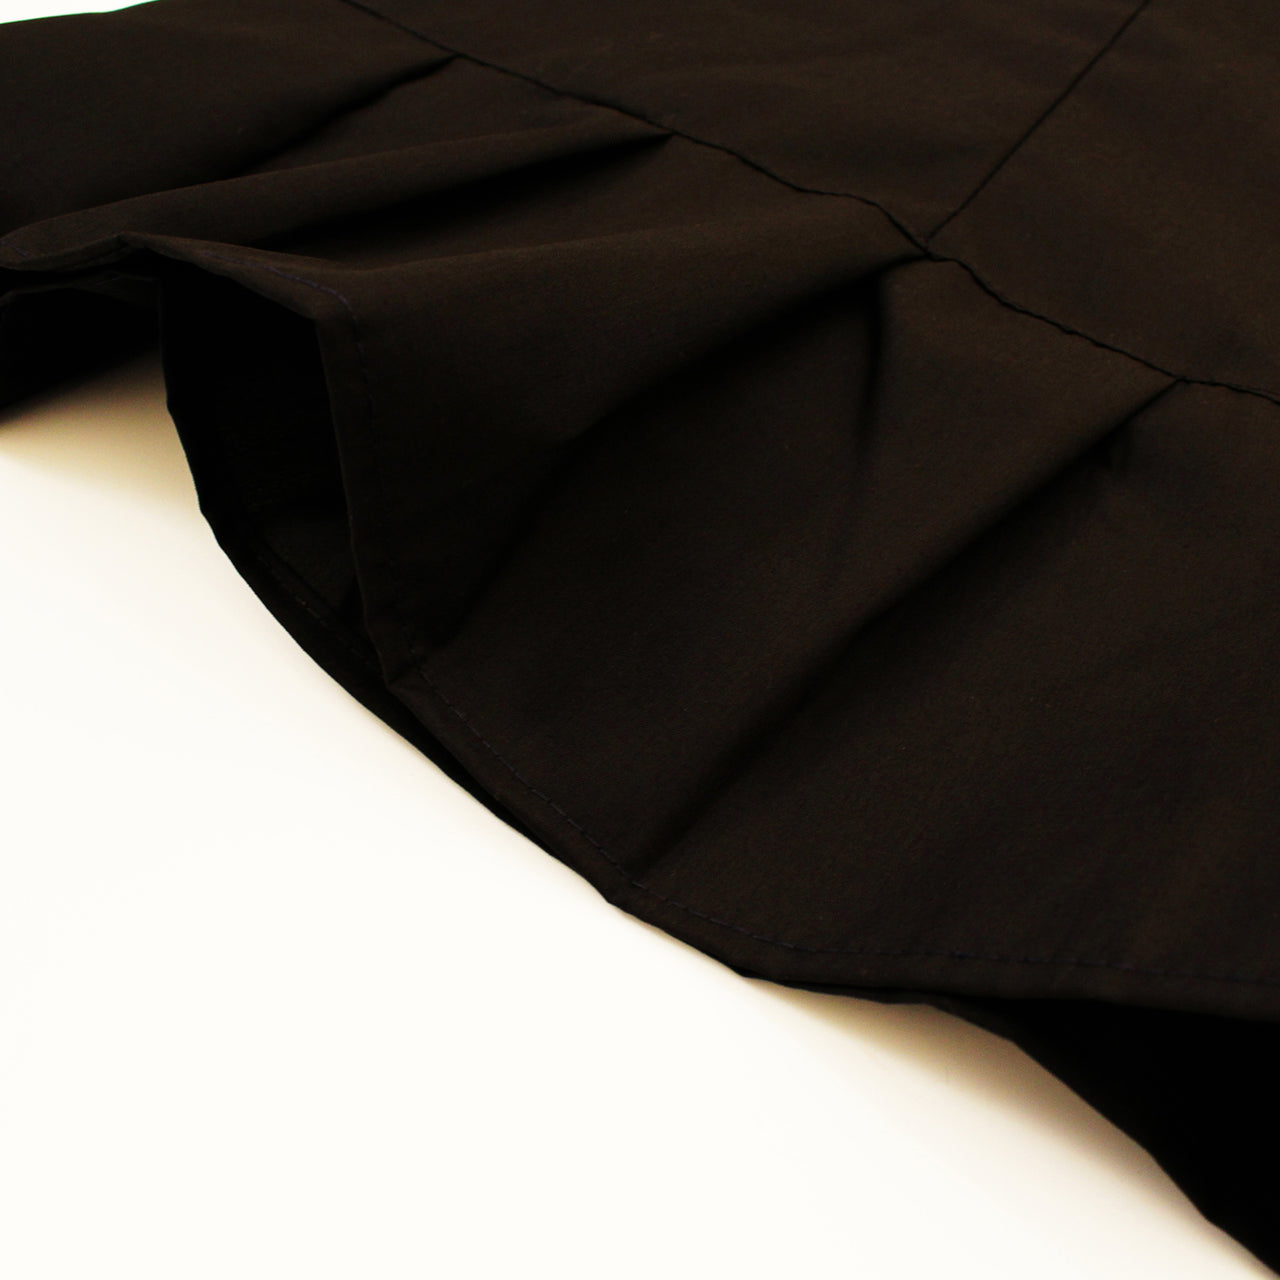 Black - Sari (Saree) Petticoat - Available in S, M, L & XL - Underskirts For Sari's